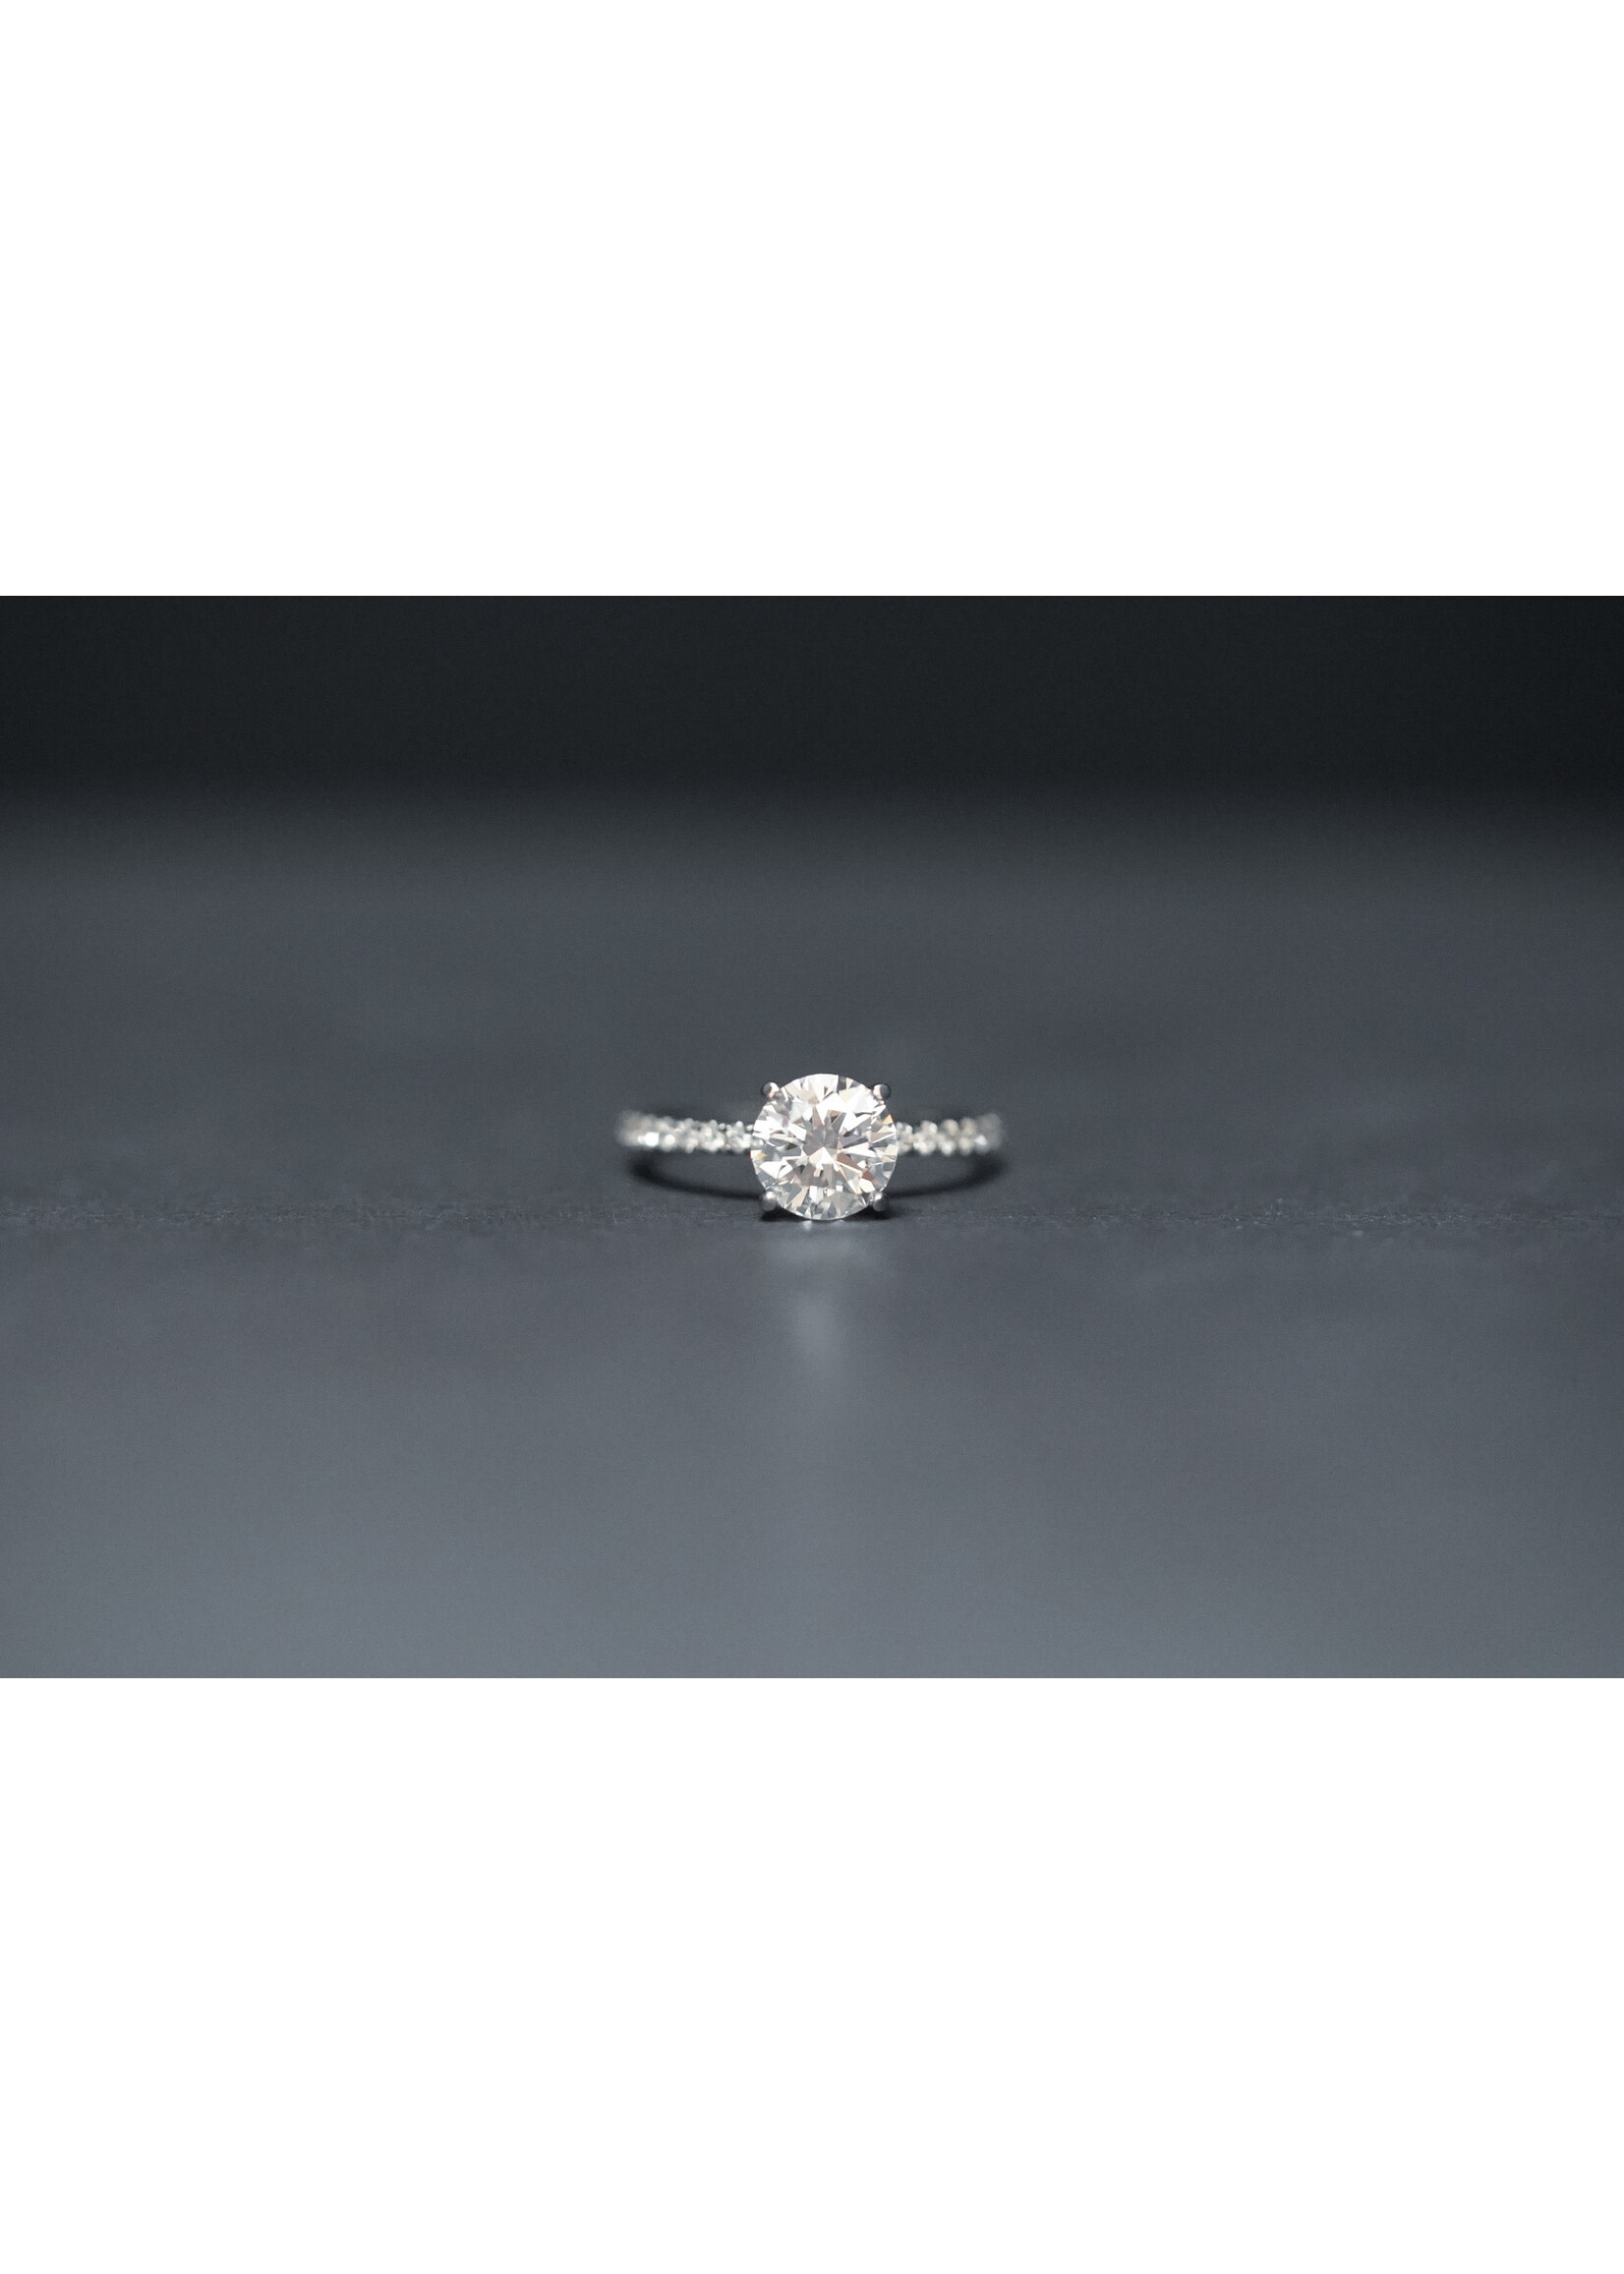 18KW 2.31g 1.87ctw (1.54ctr) F/VS1 GIA Round Diamond Hidden Halo Engagement Ring (size 6.5)